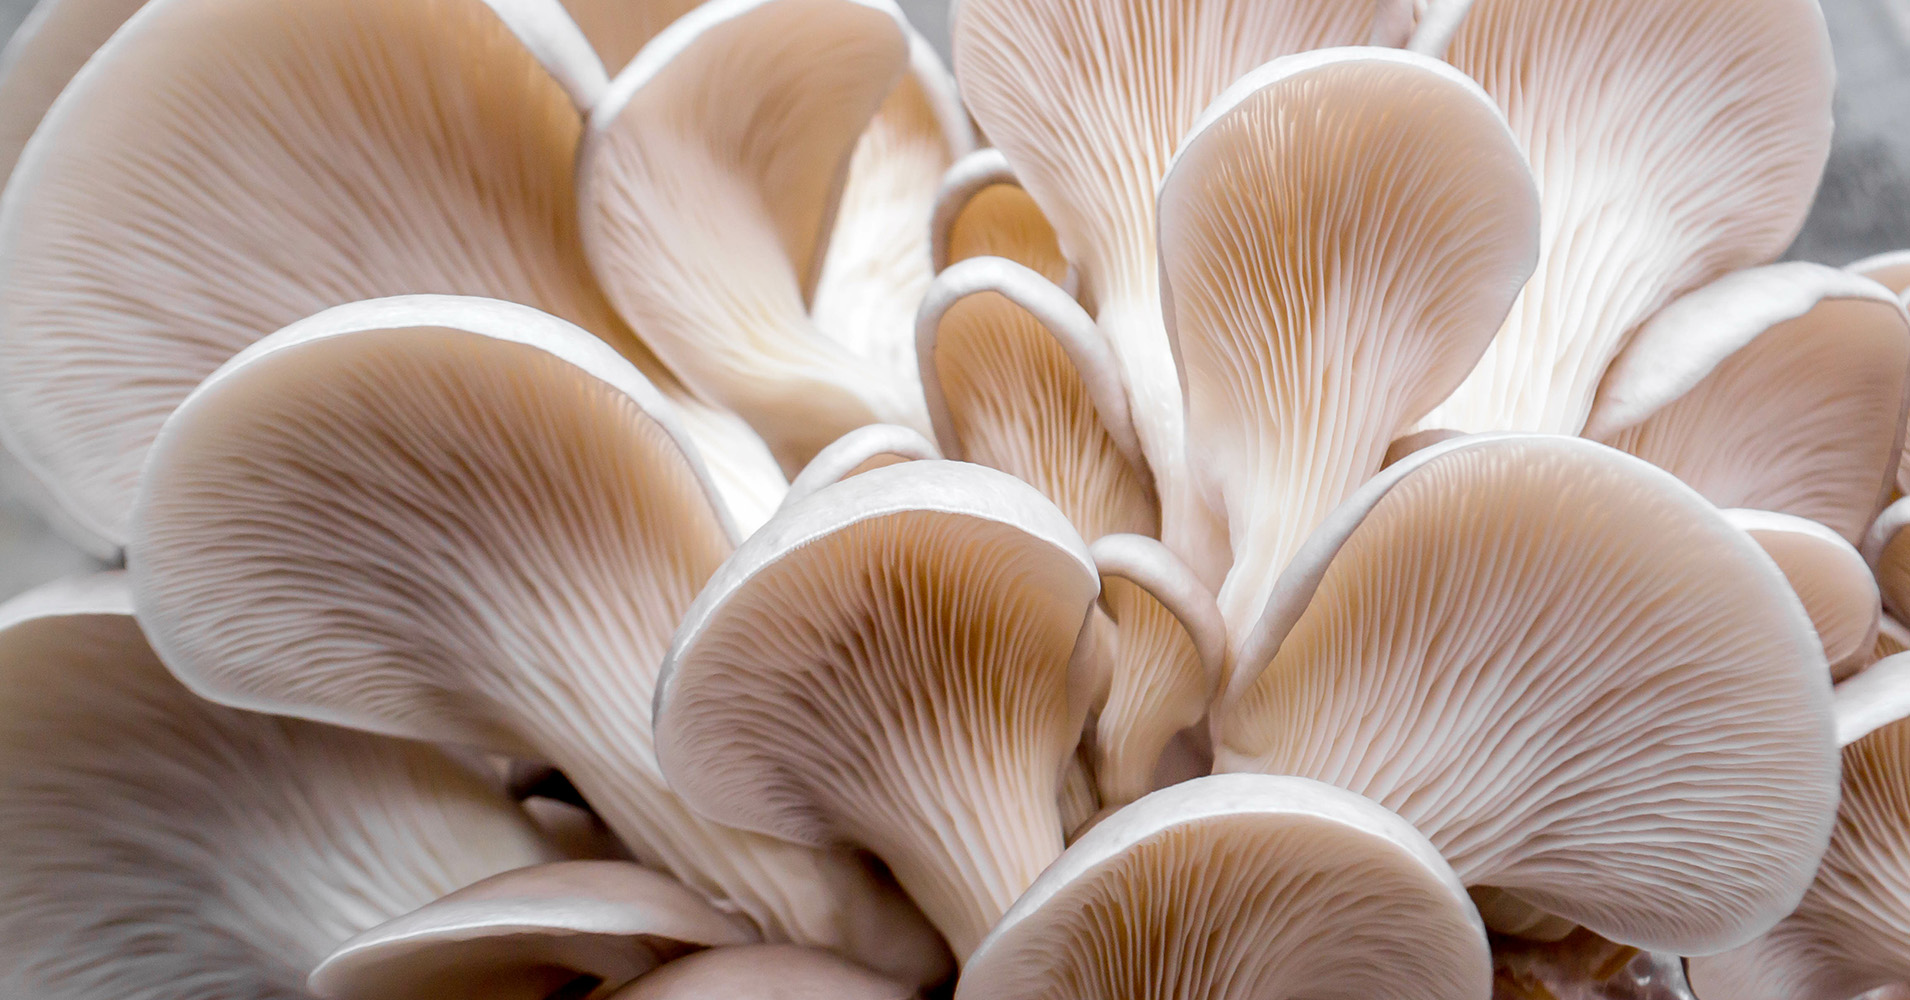 Underside view of veil of white oyster mushrooms